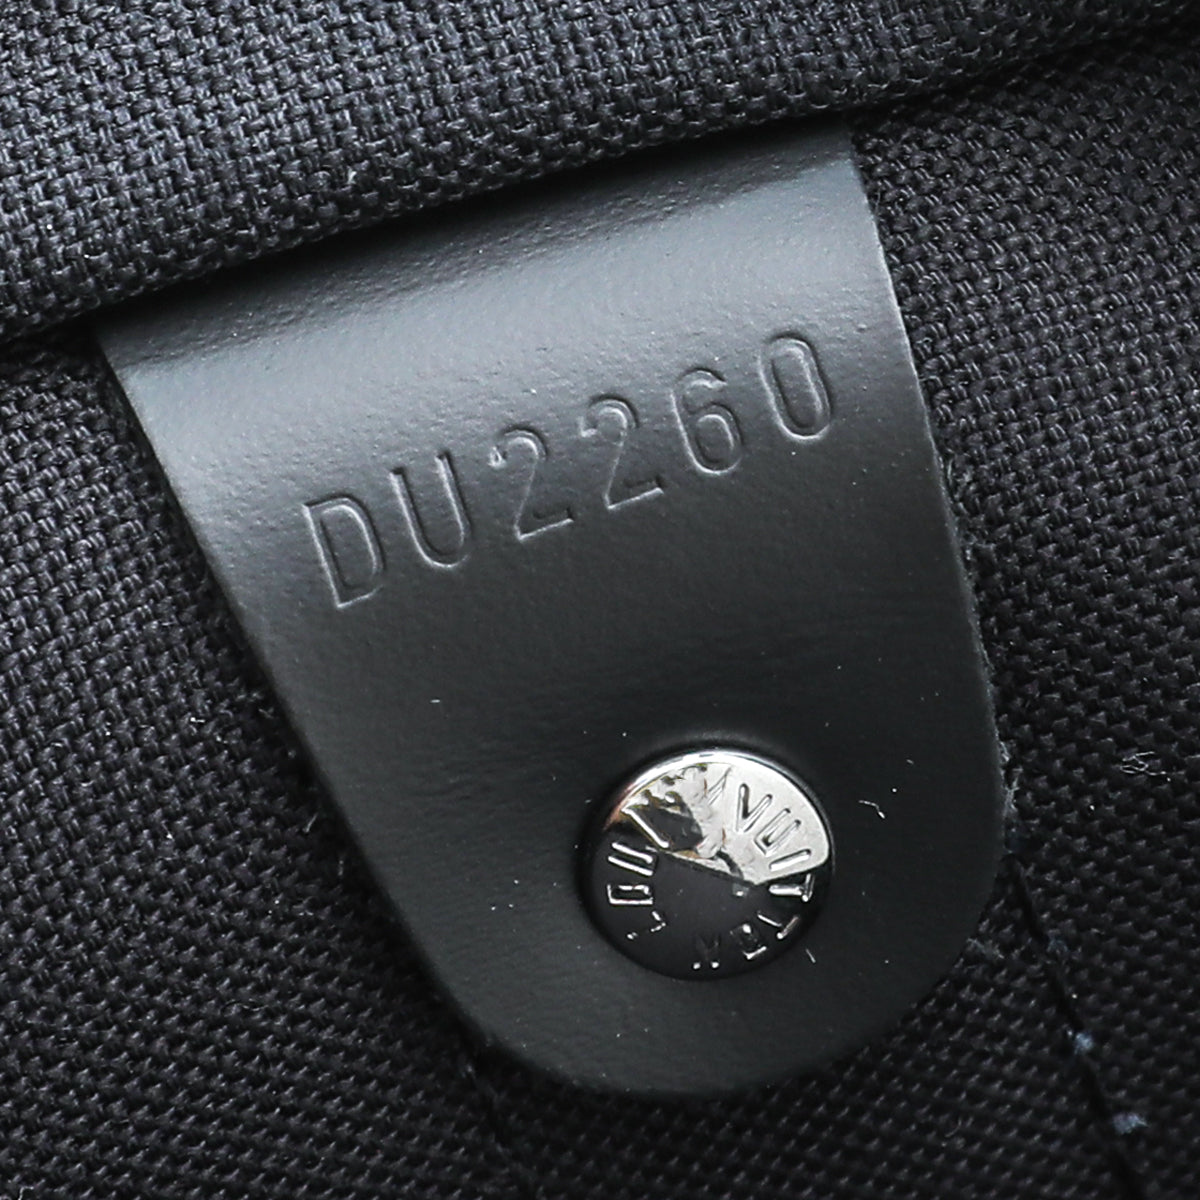 Louis Vuitton Monogram Eclipse Keepall Bandouliere Bag